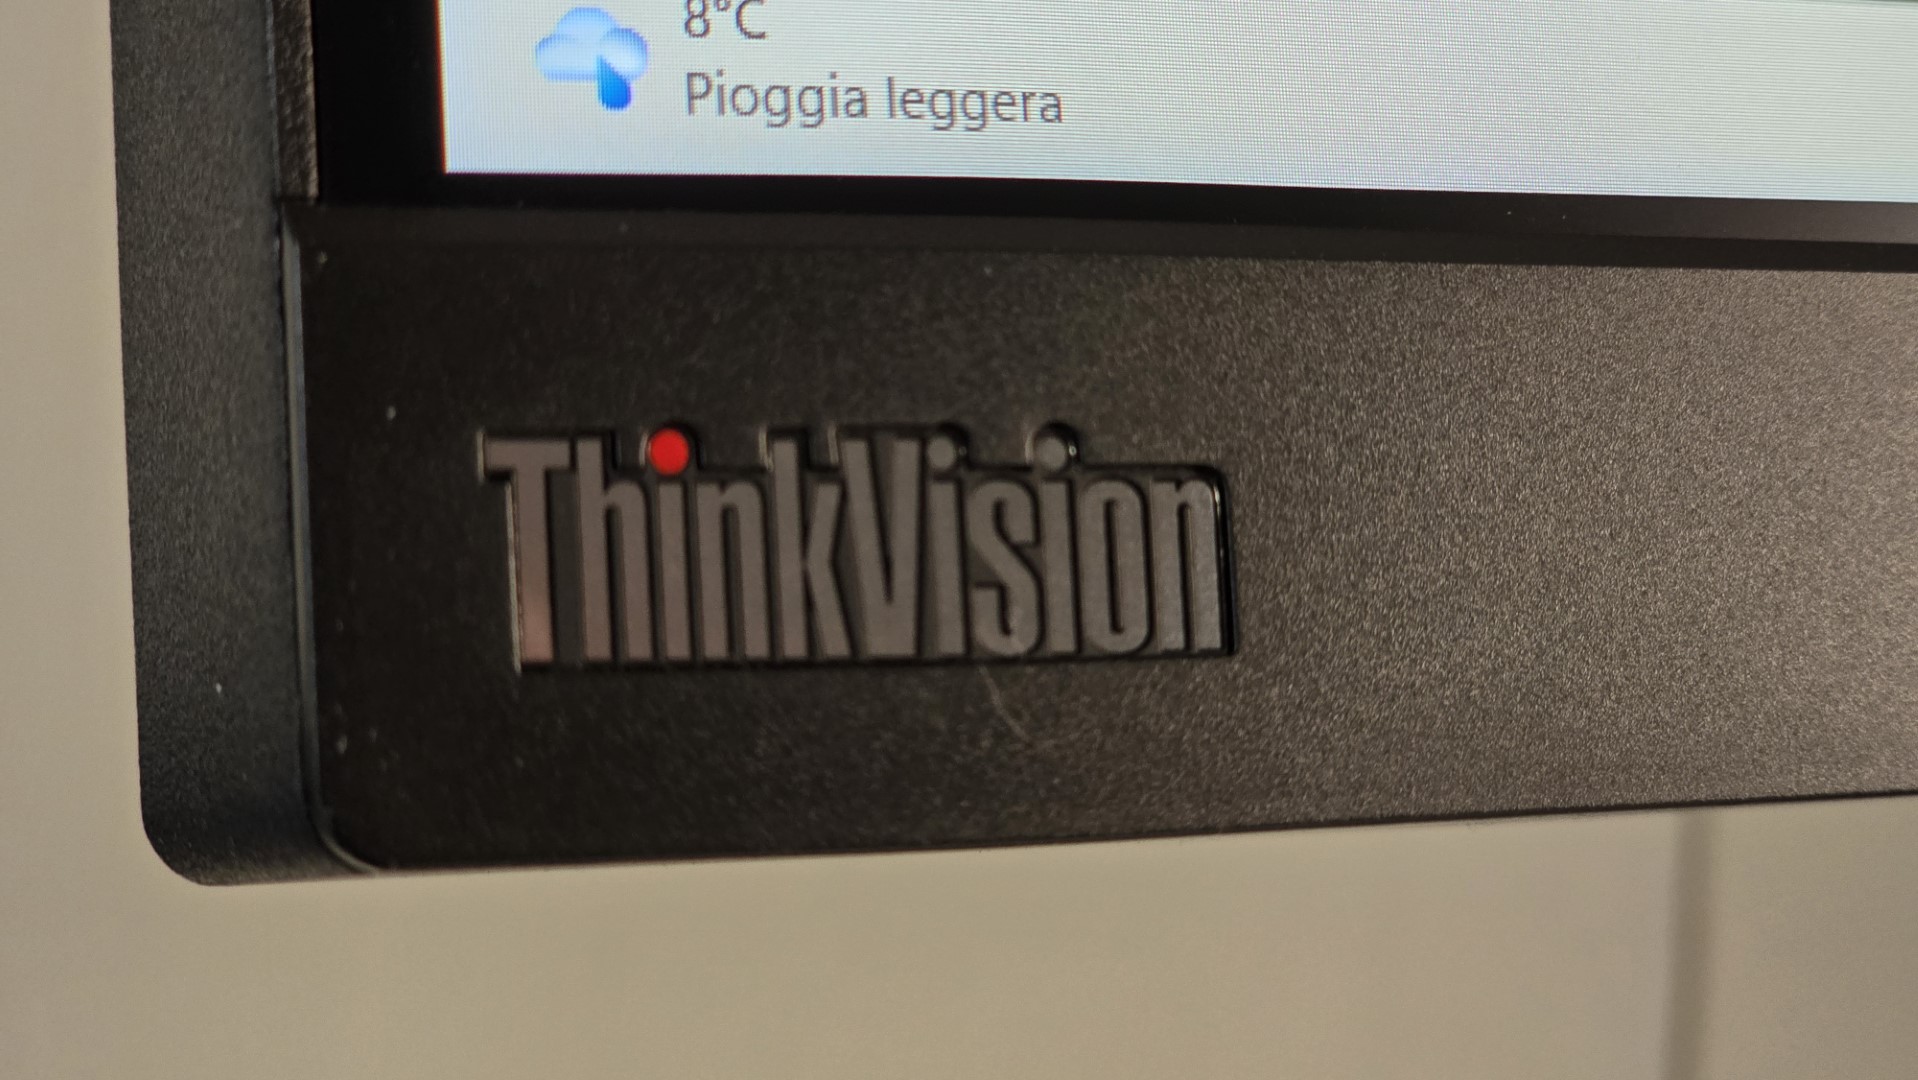 Lenovo ThinkVision P32pz-30